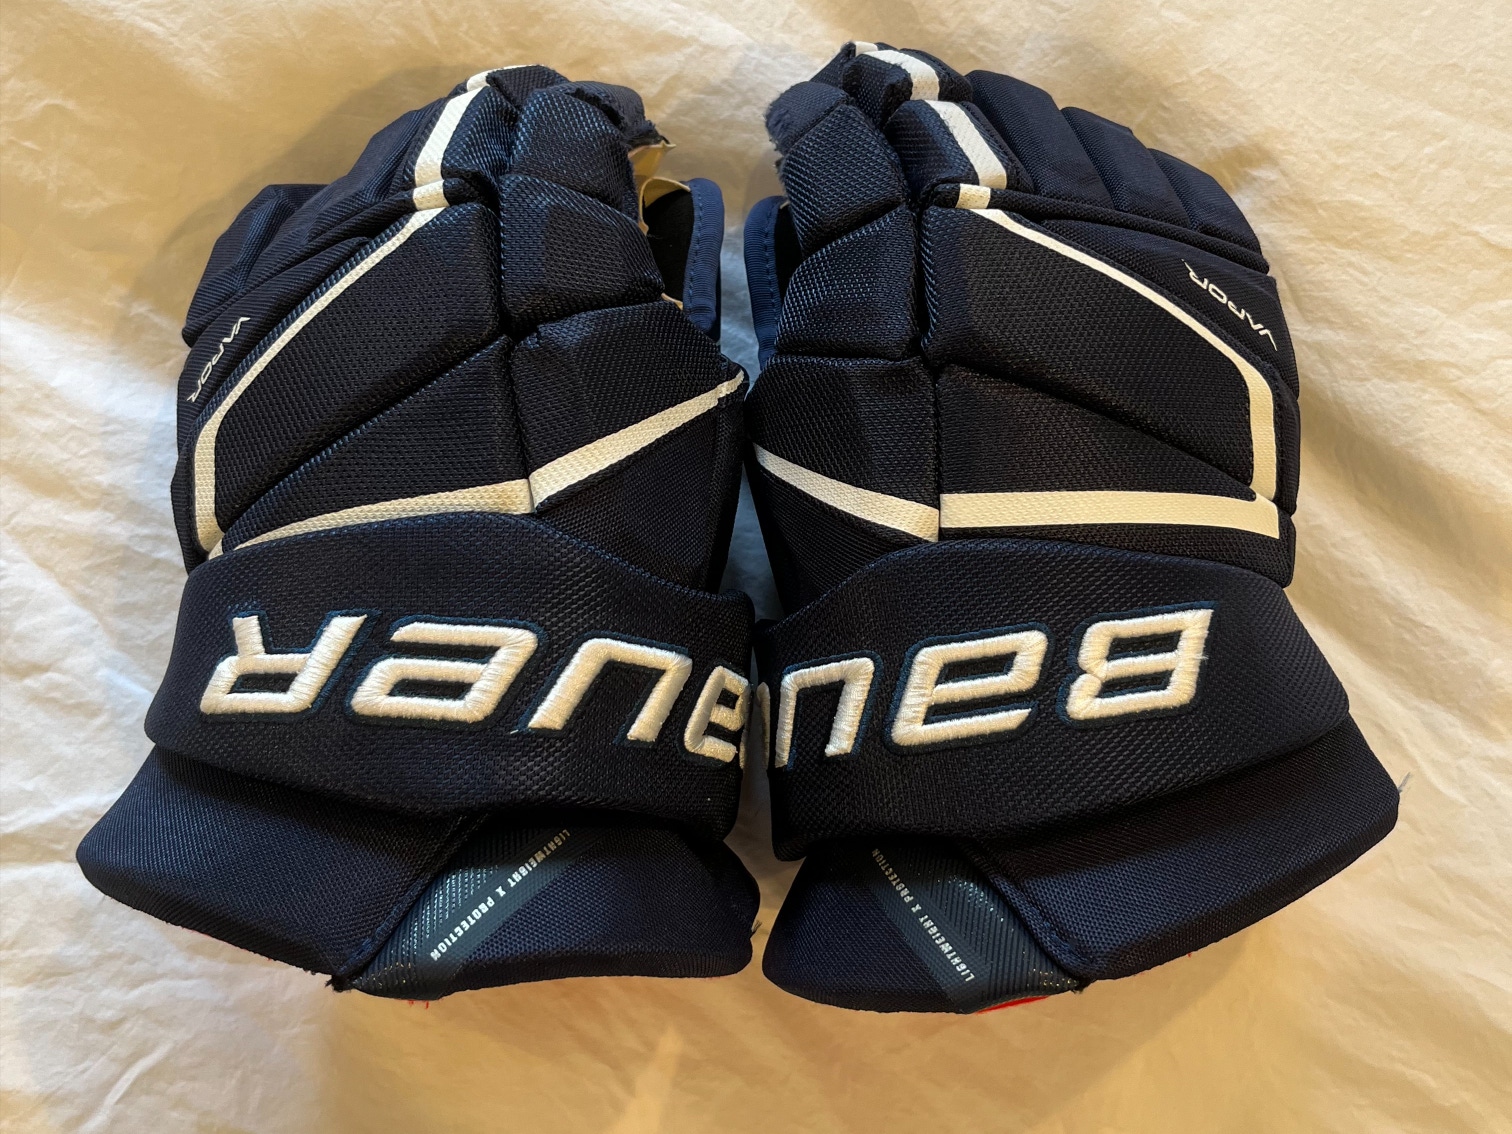 Used Bauer Vapor 3X Pro Gloves 15"